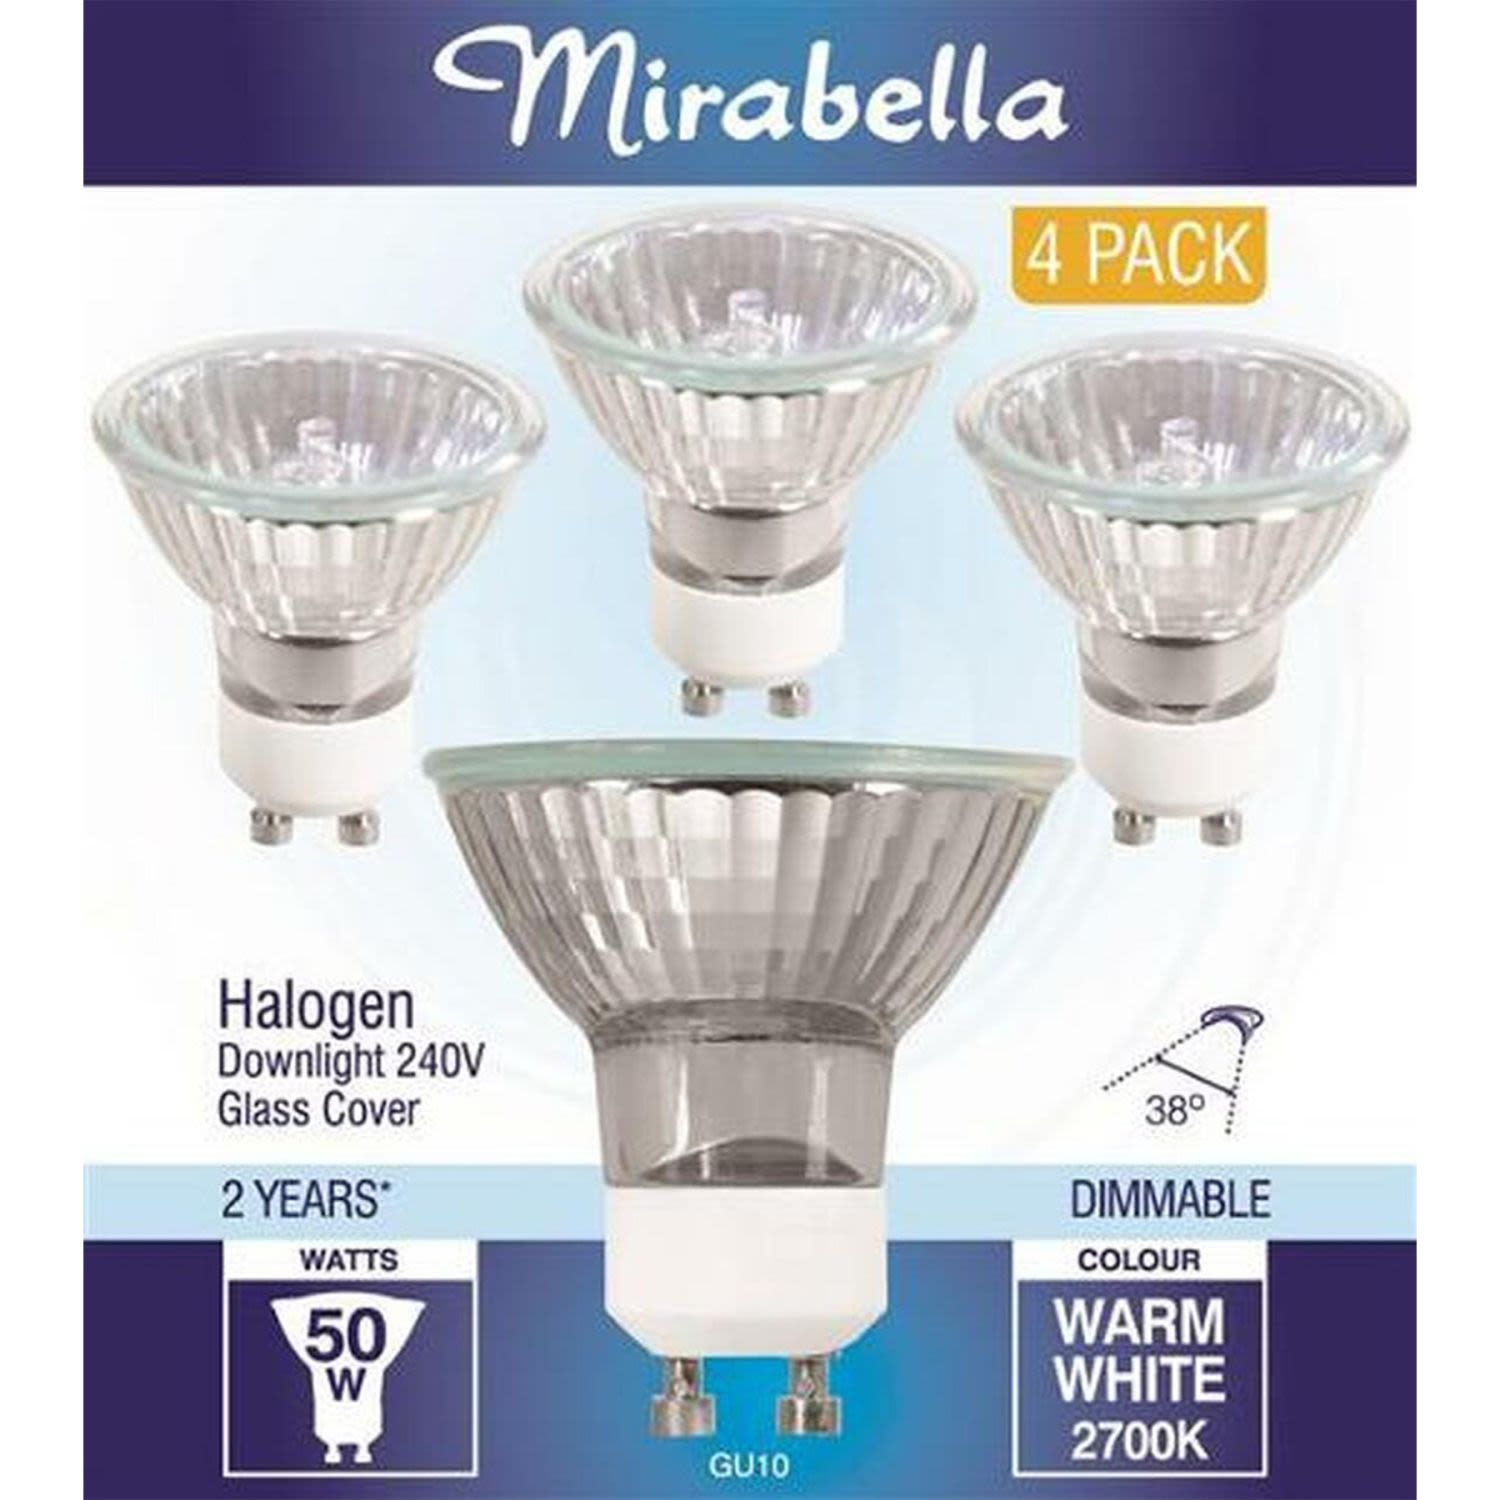 Mirabella Halogen Downlight 240V Glass Cover Warm White 2700K 50W Gu10 Light Globes, 4 Each